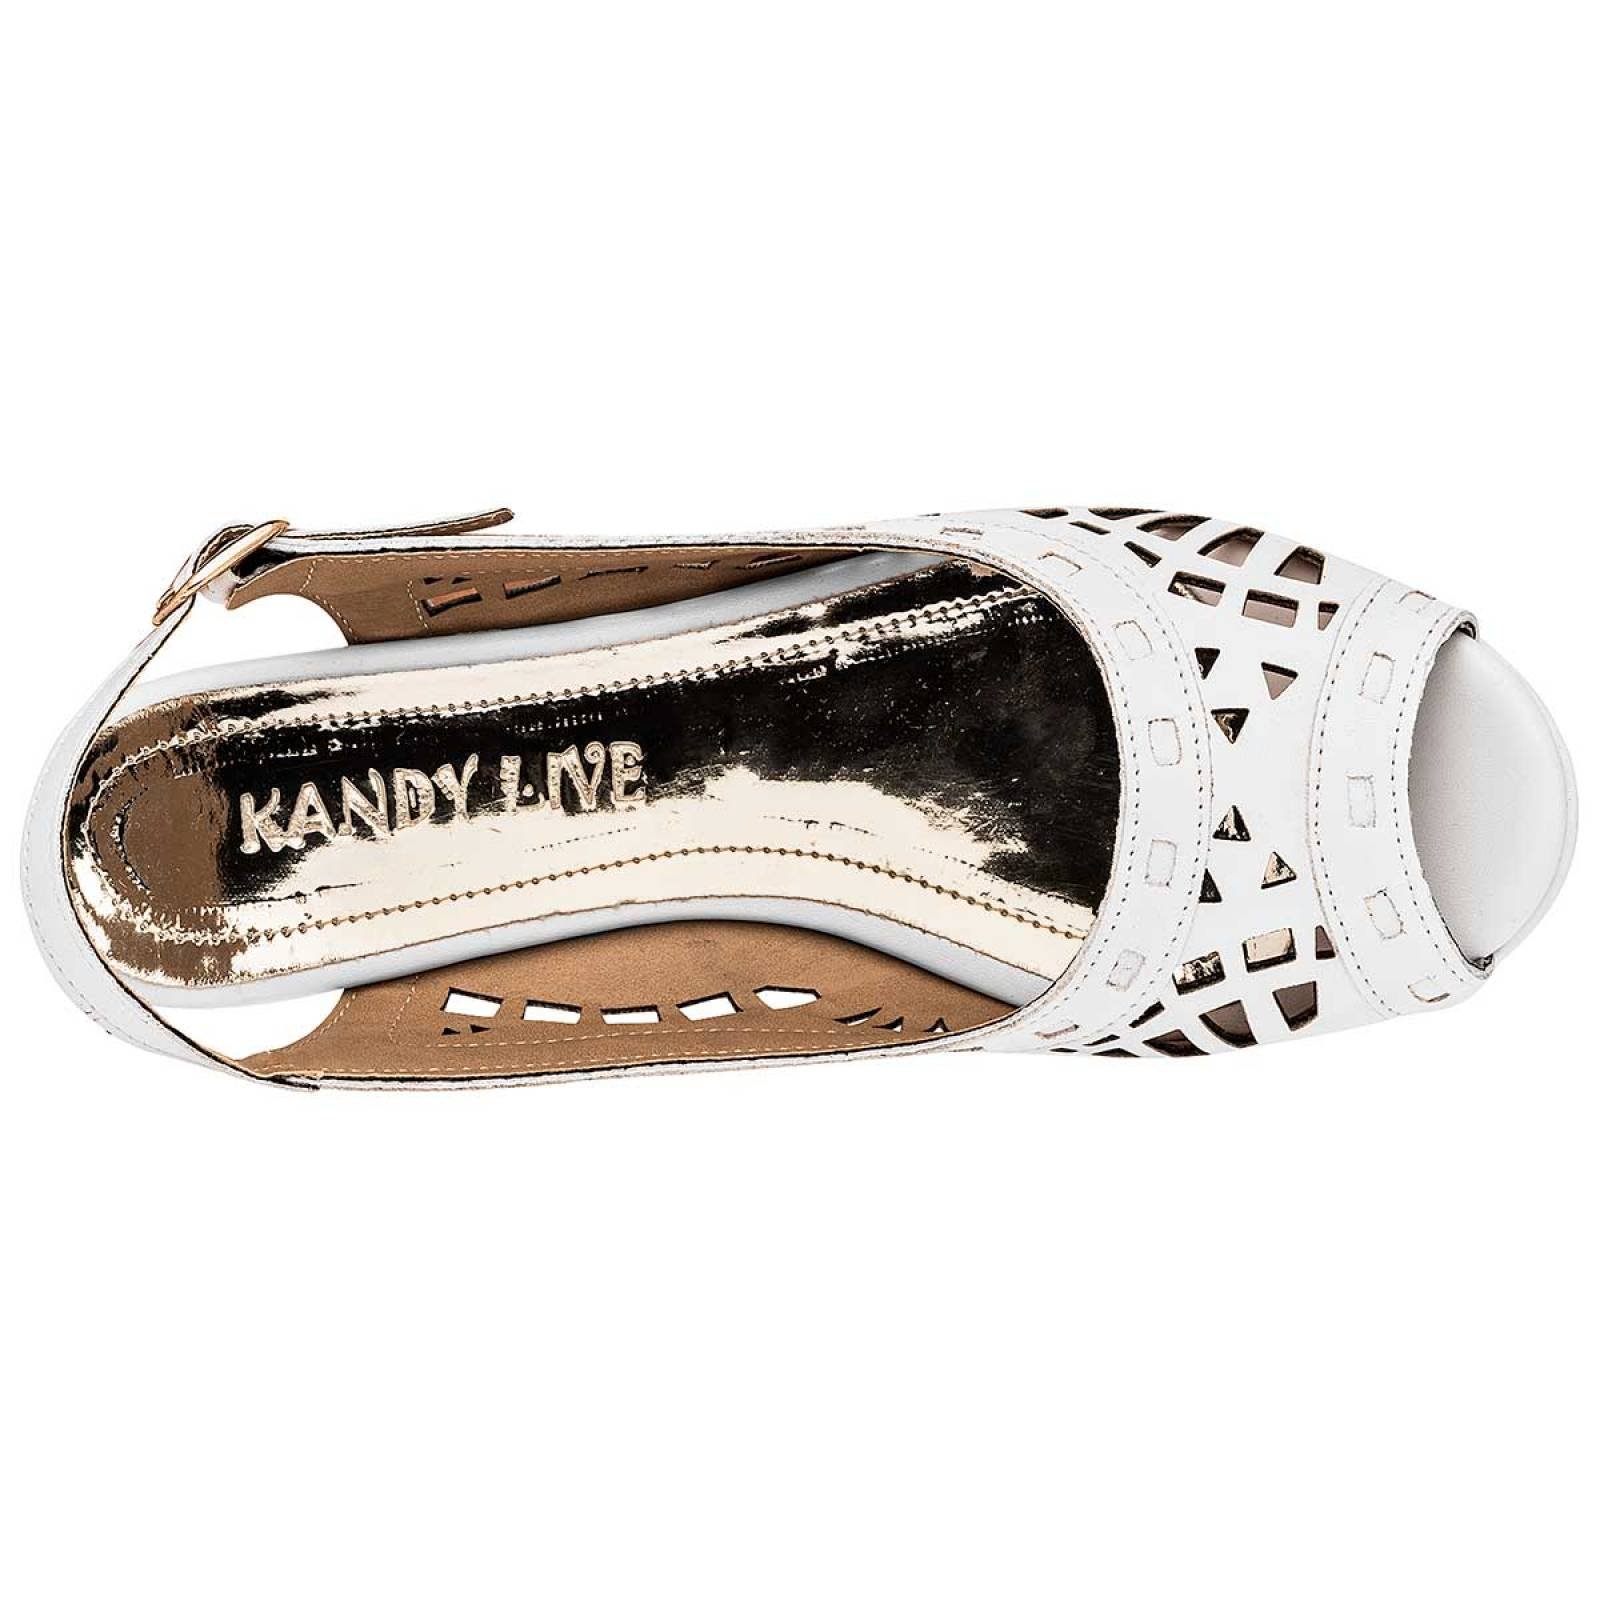 Kandy live Zapato Mujer Blanco